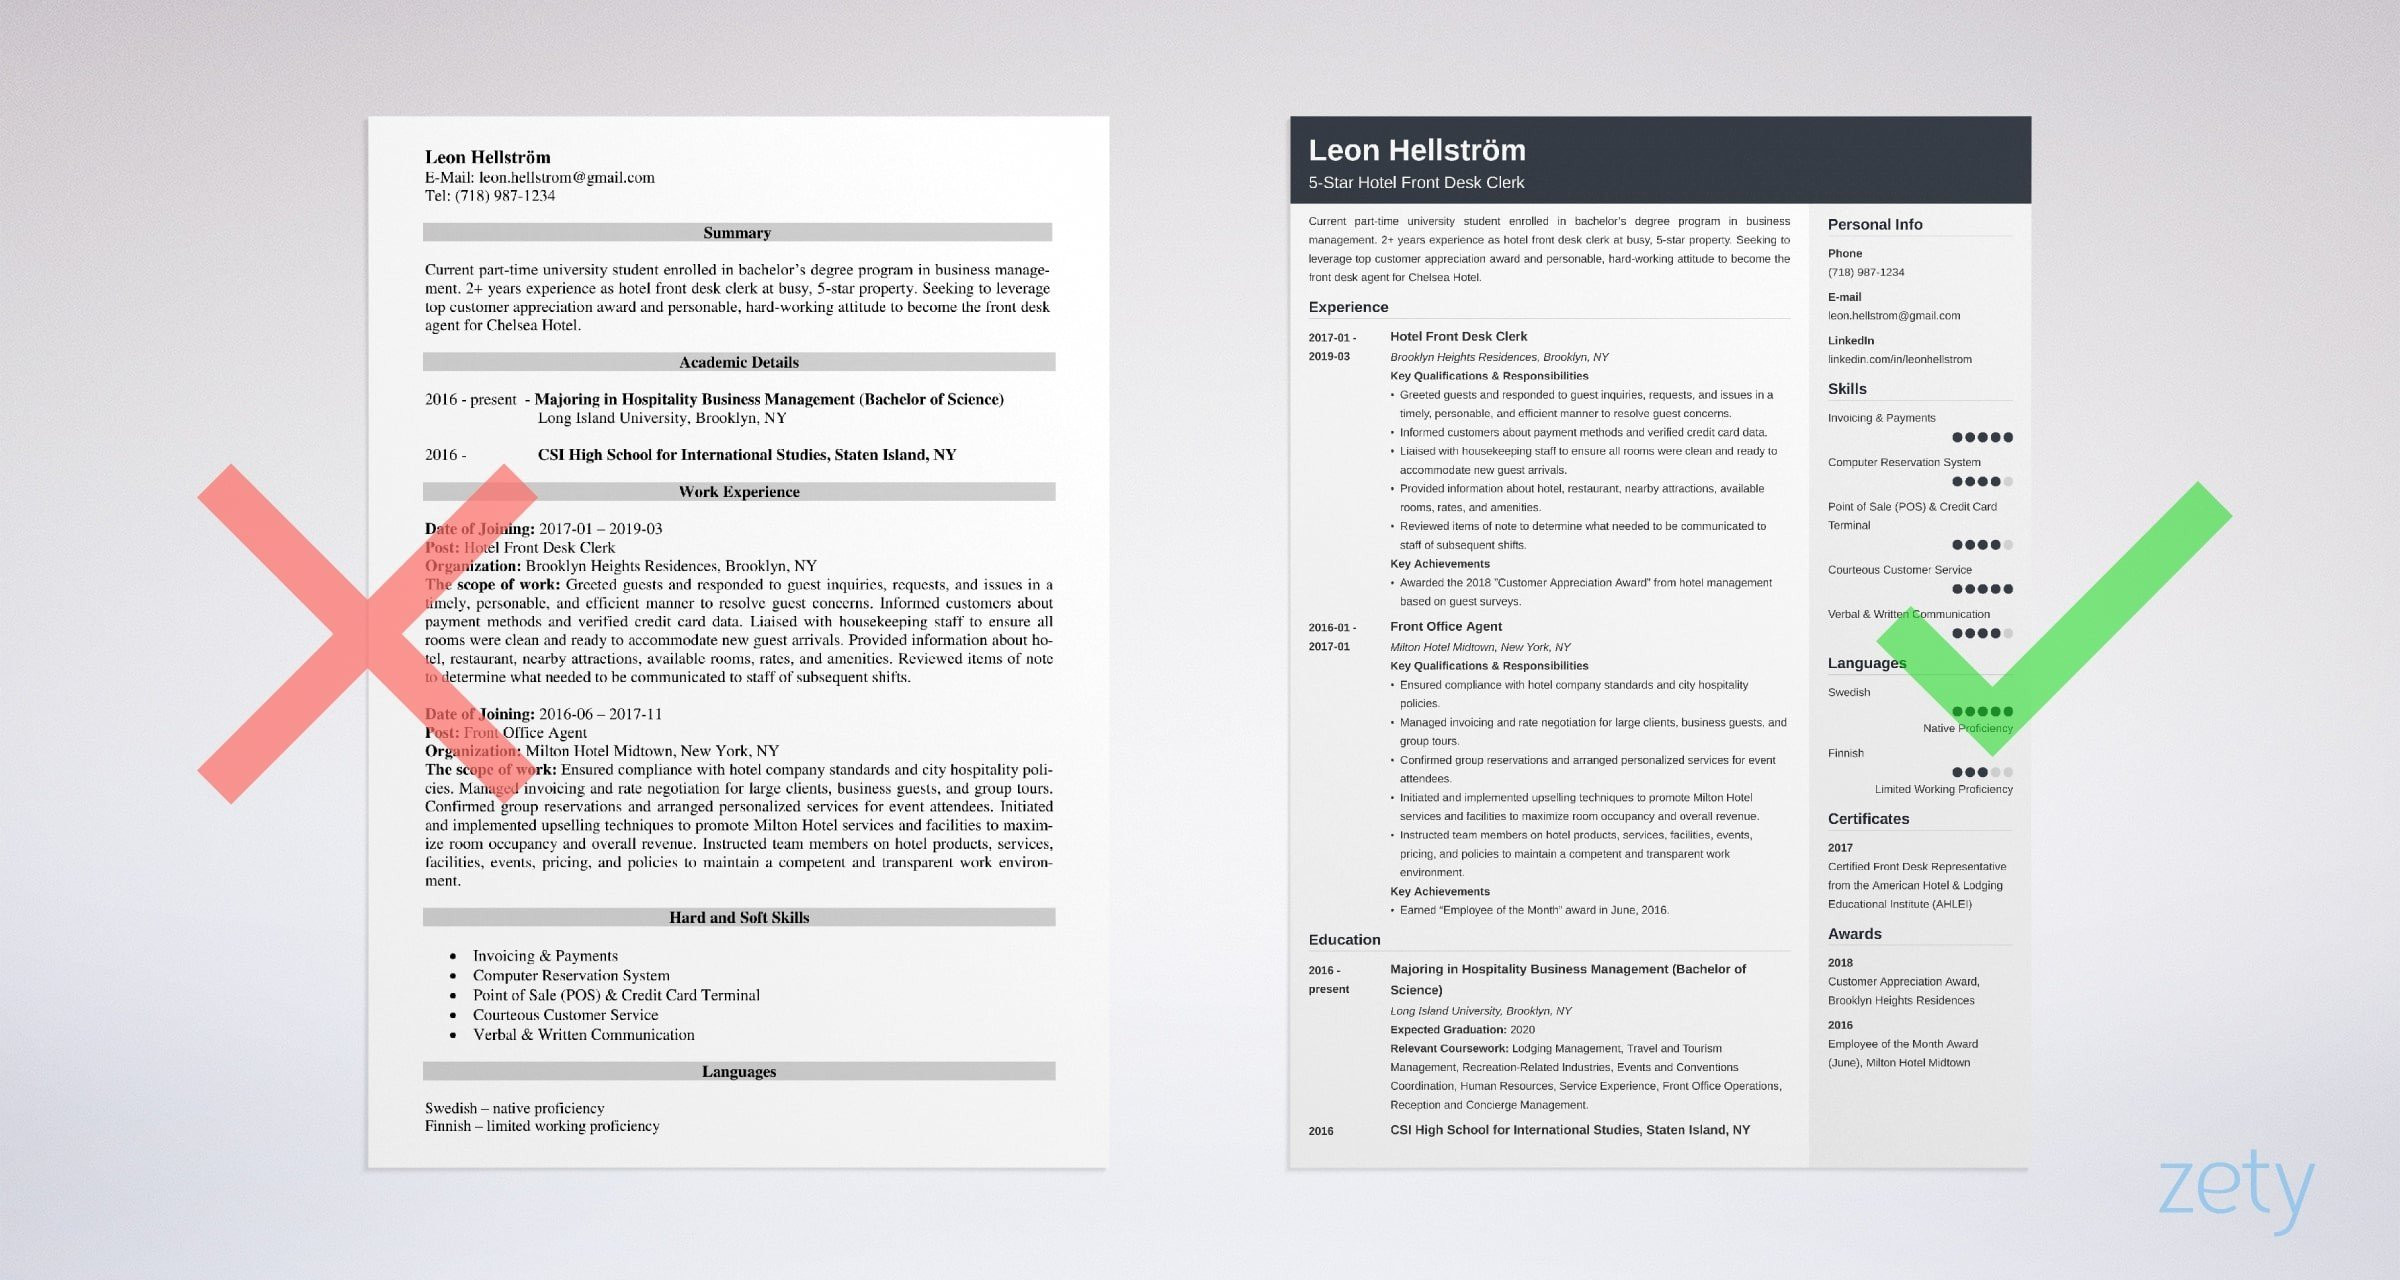 Desktop Resume Sample Related to Team Front Desk Resume: Samples for Agent, Clerk & associate